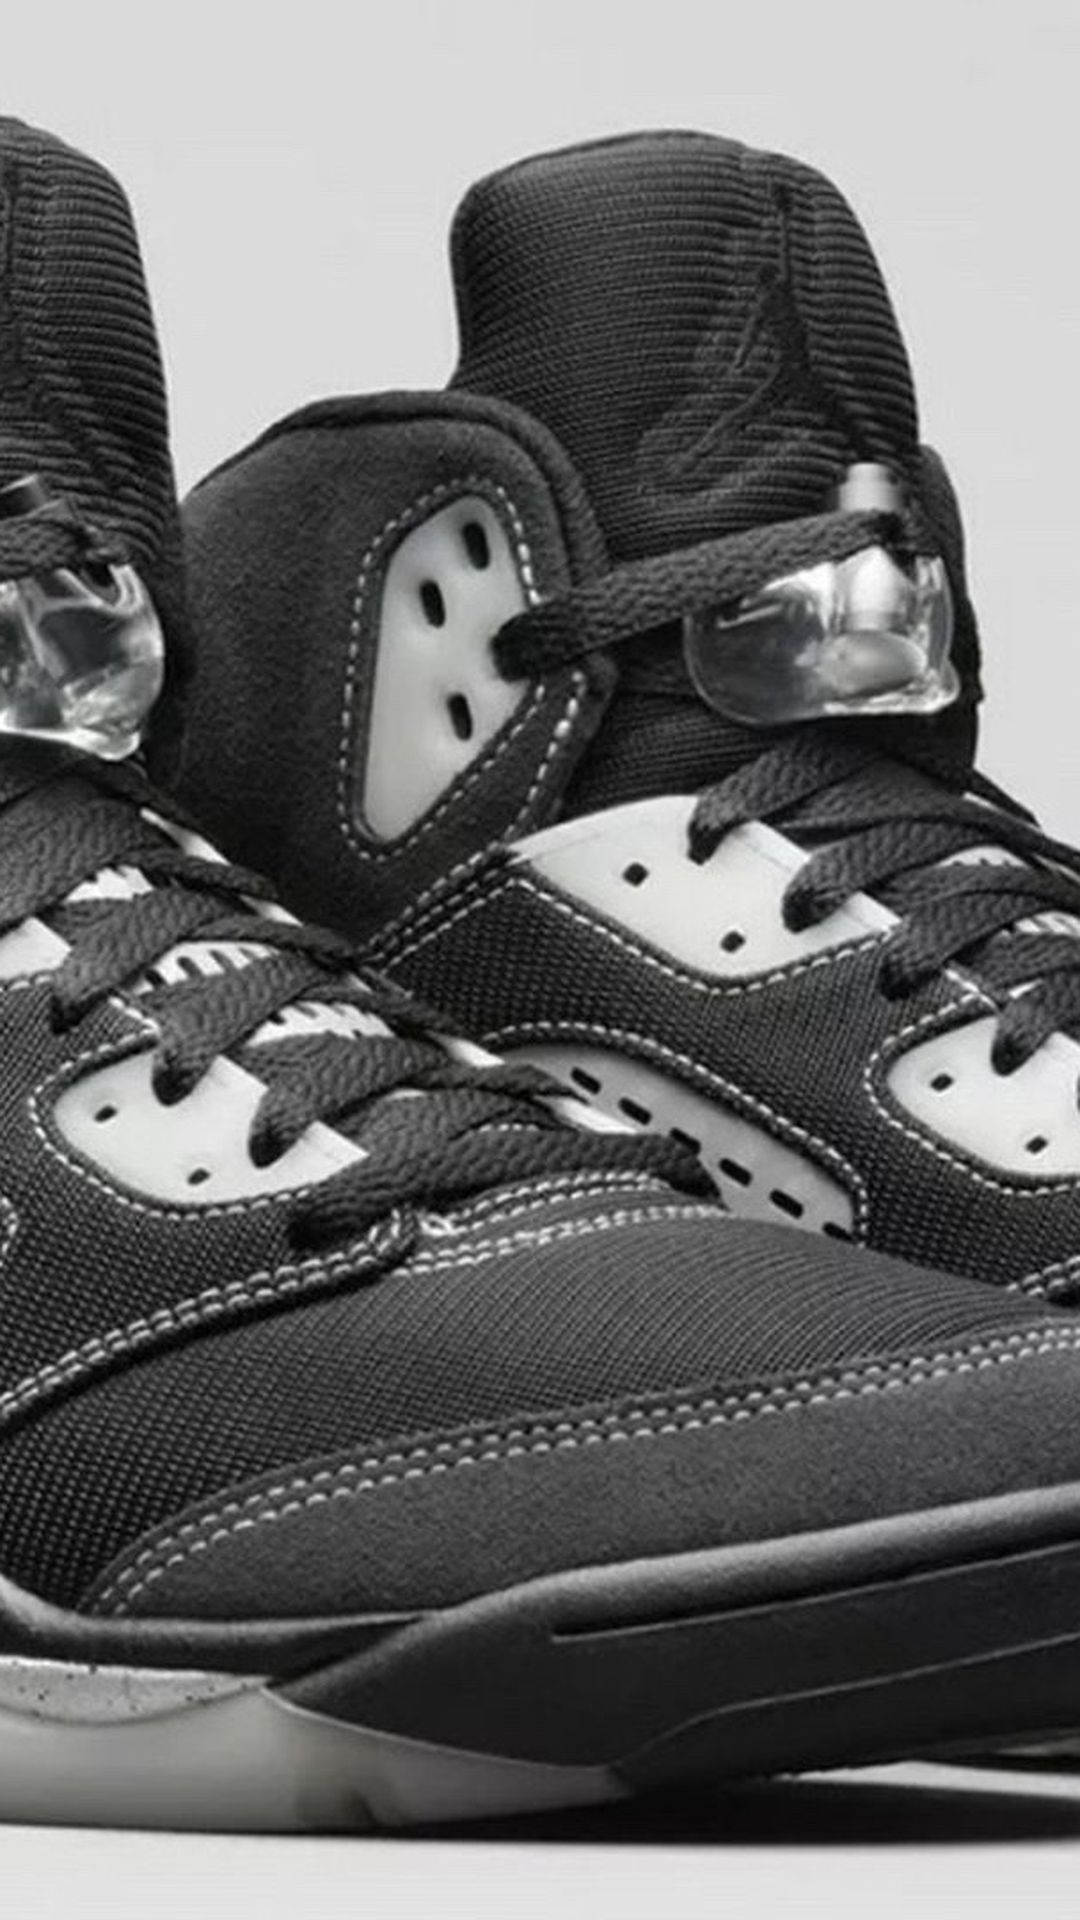 Nike Air Jordan 5 Retro Men's Shoes Anthracite Black DA0731-001 sz 11 * in hand